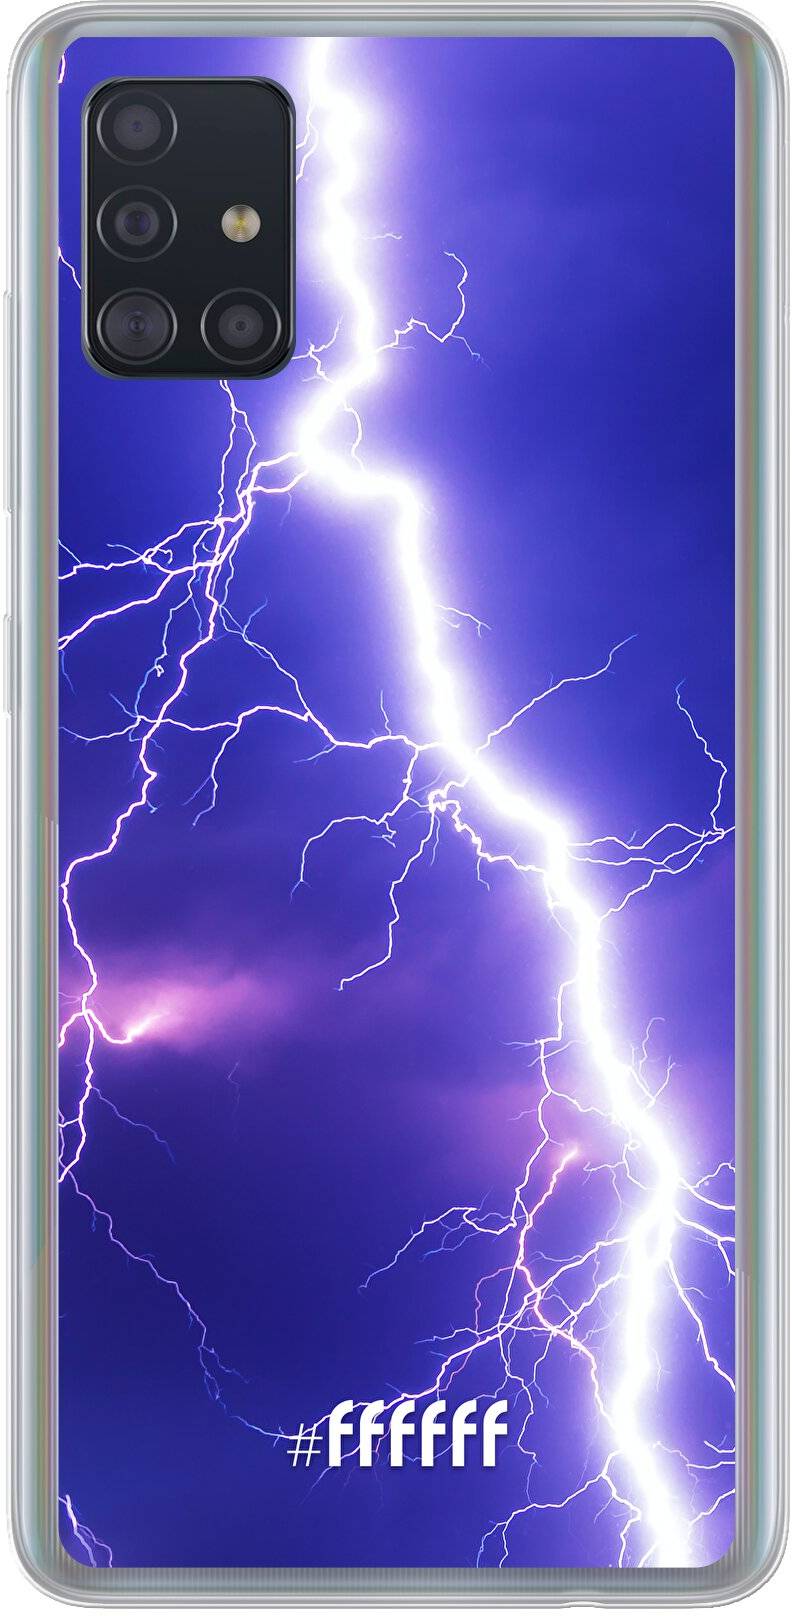 Thunderbolt Galaxy A51